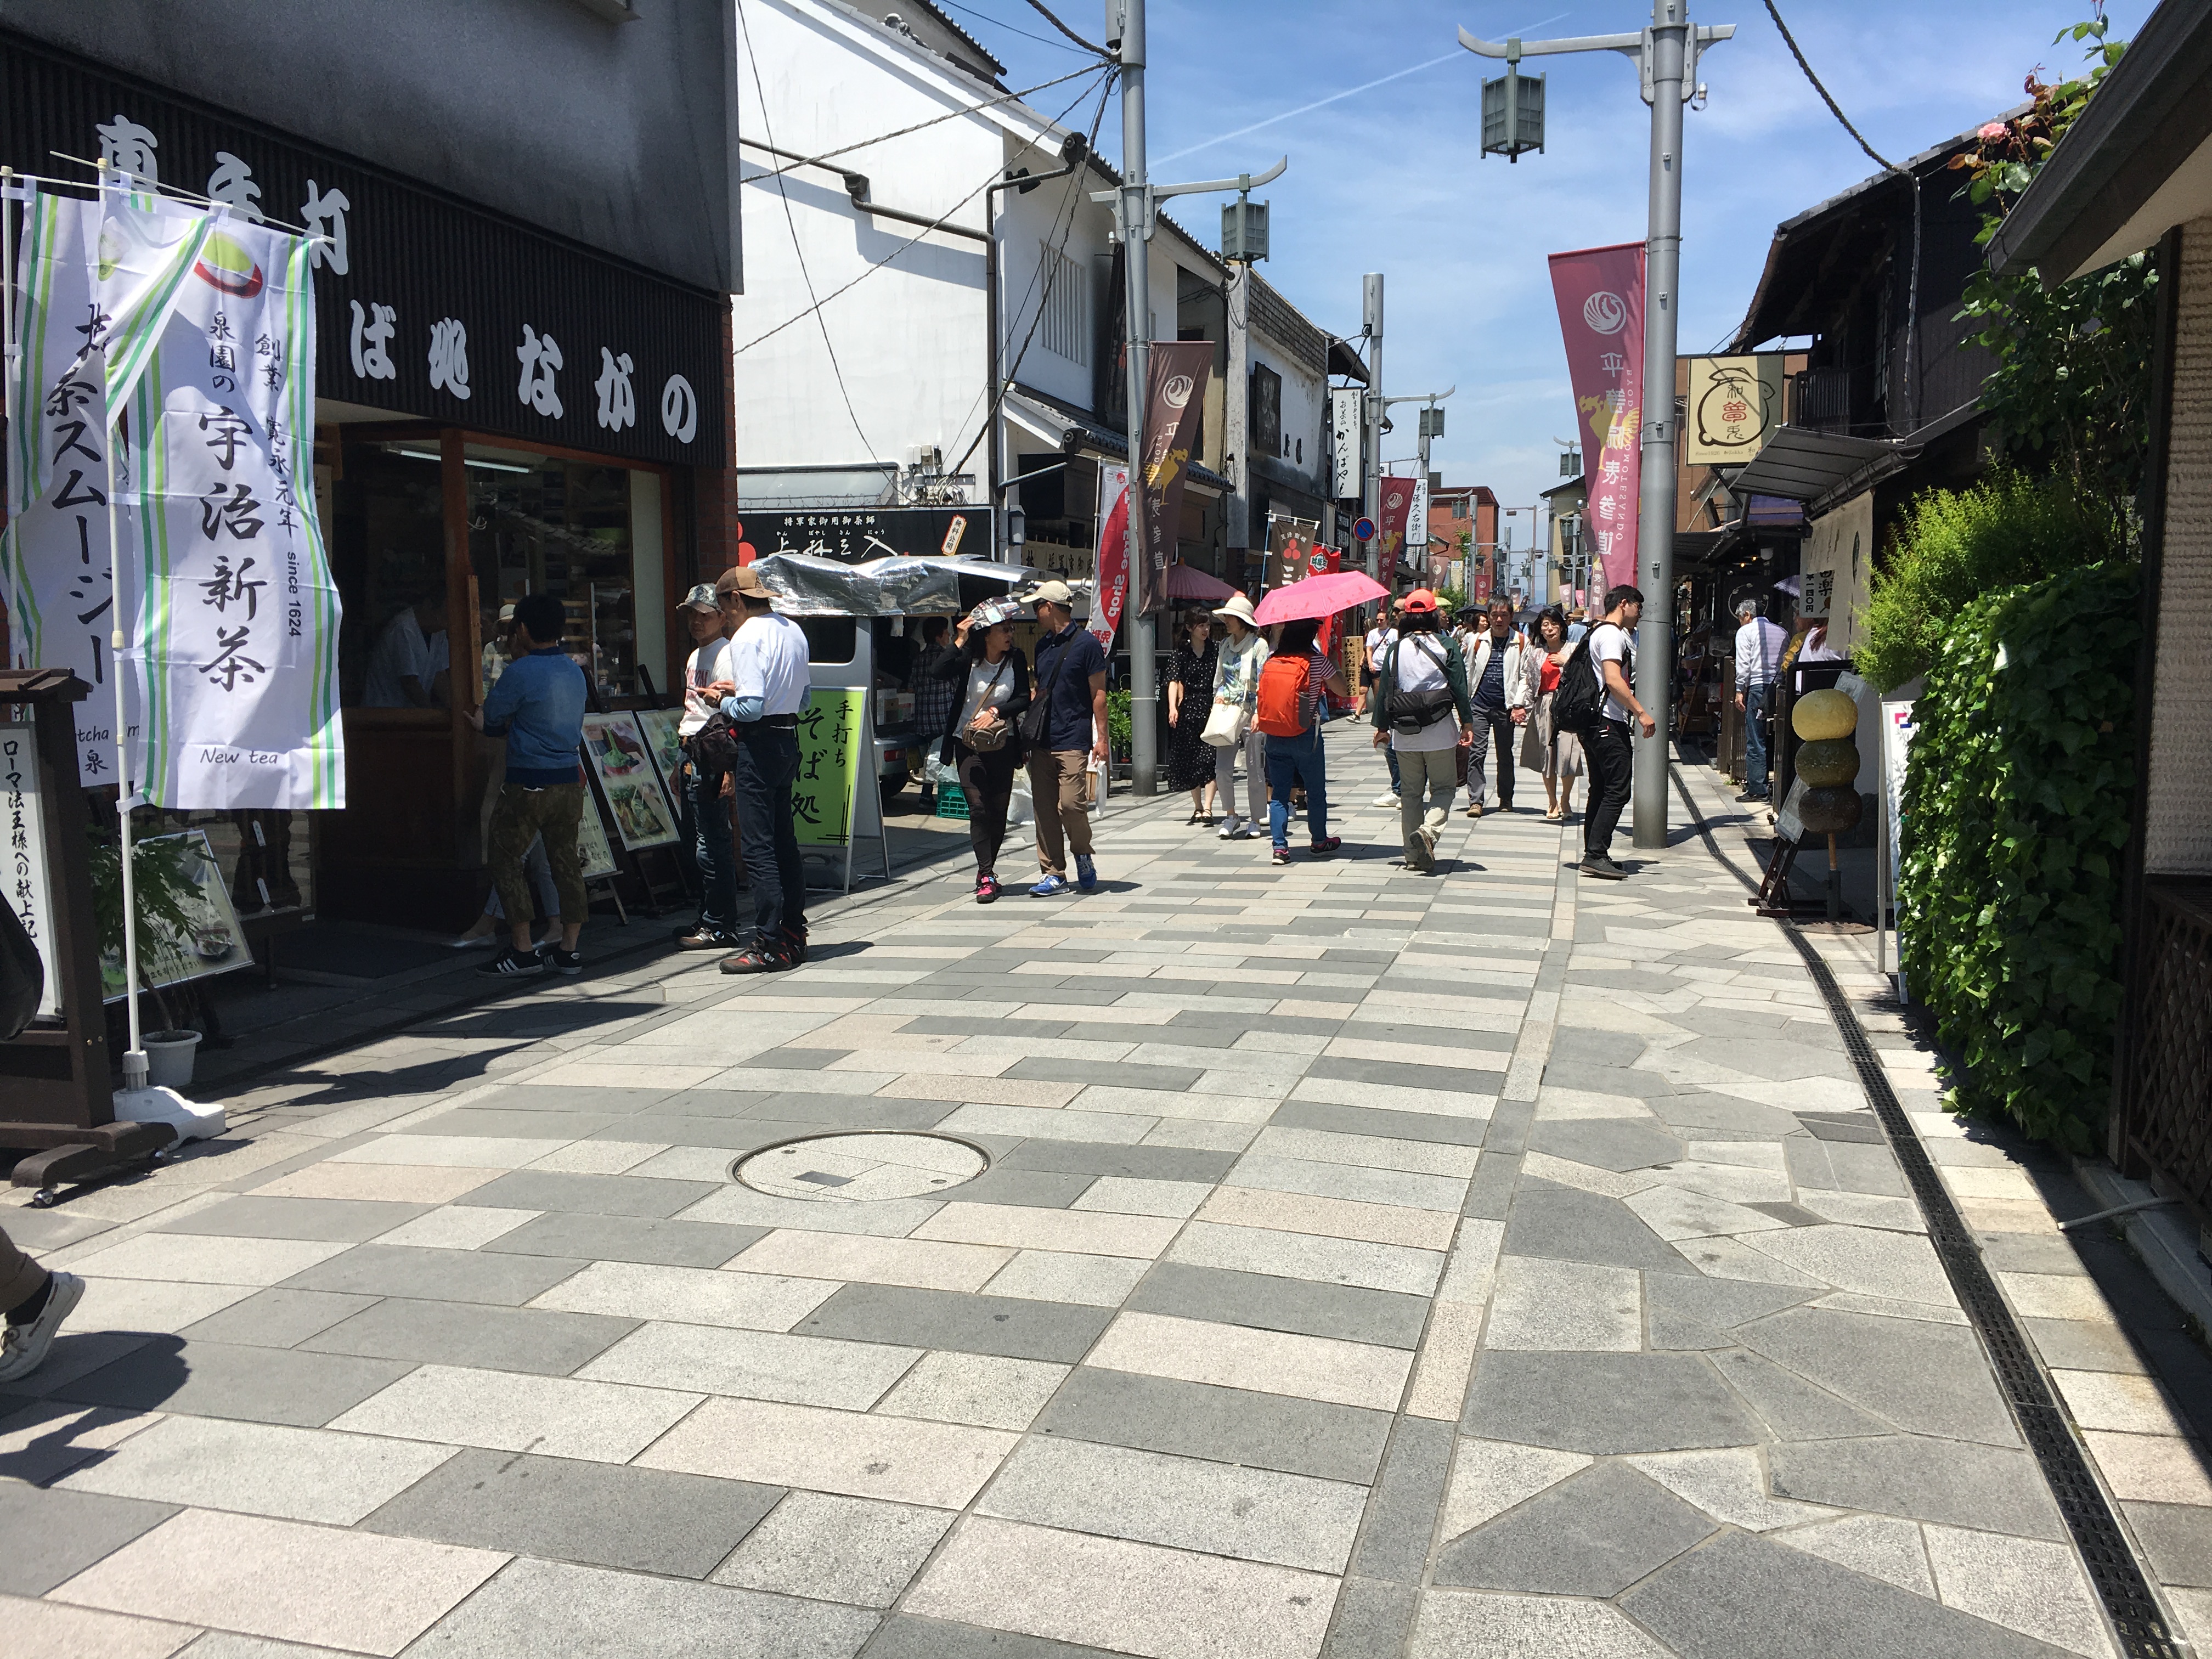 tea shops lining the street in Uji in Kyoto